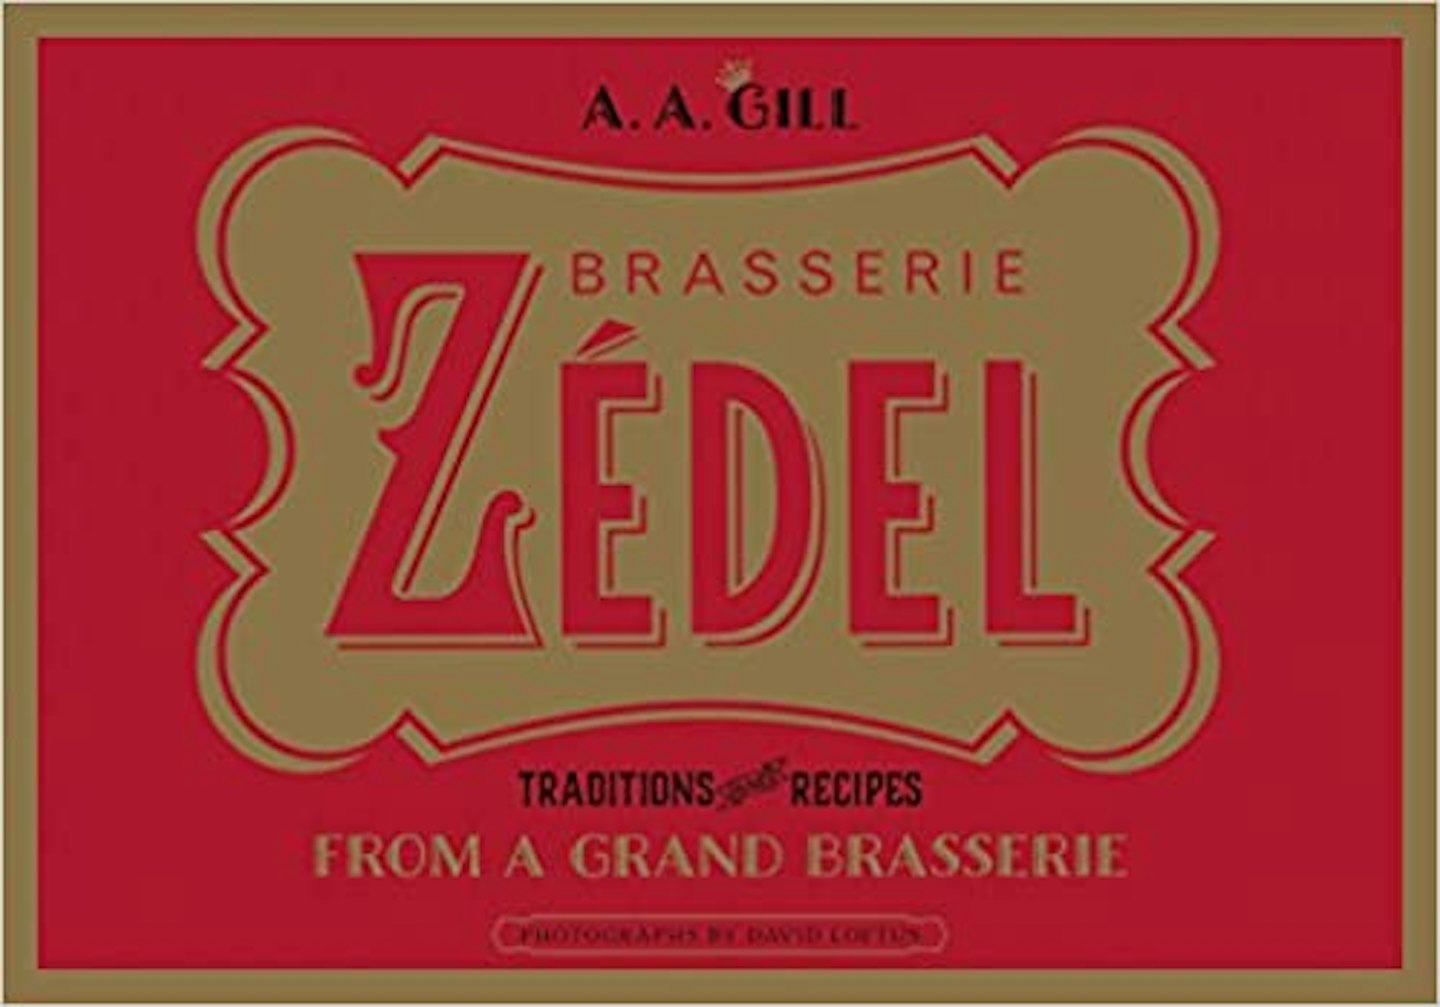 Best cookbooks Brasserie Zu00e9del: Traditions and recipes from a Grand Brasserie